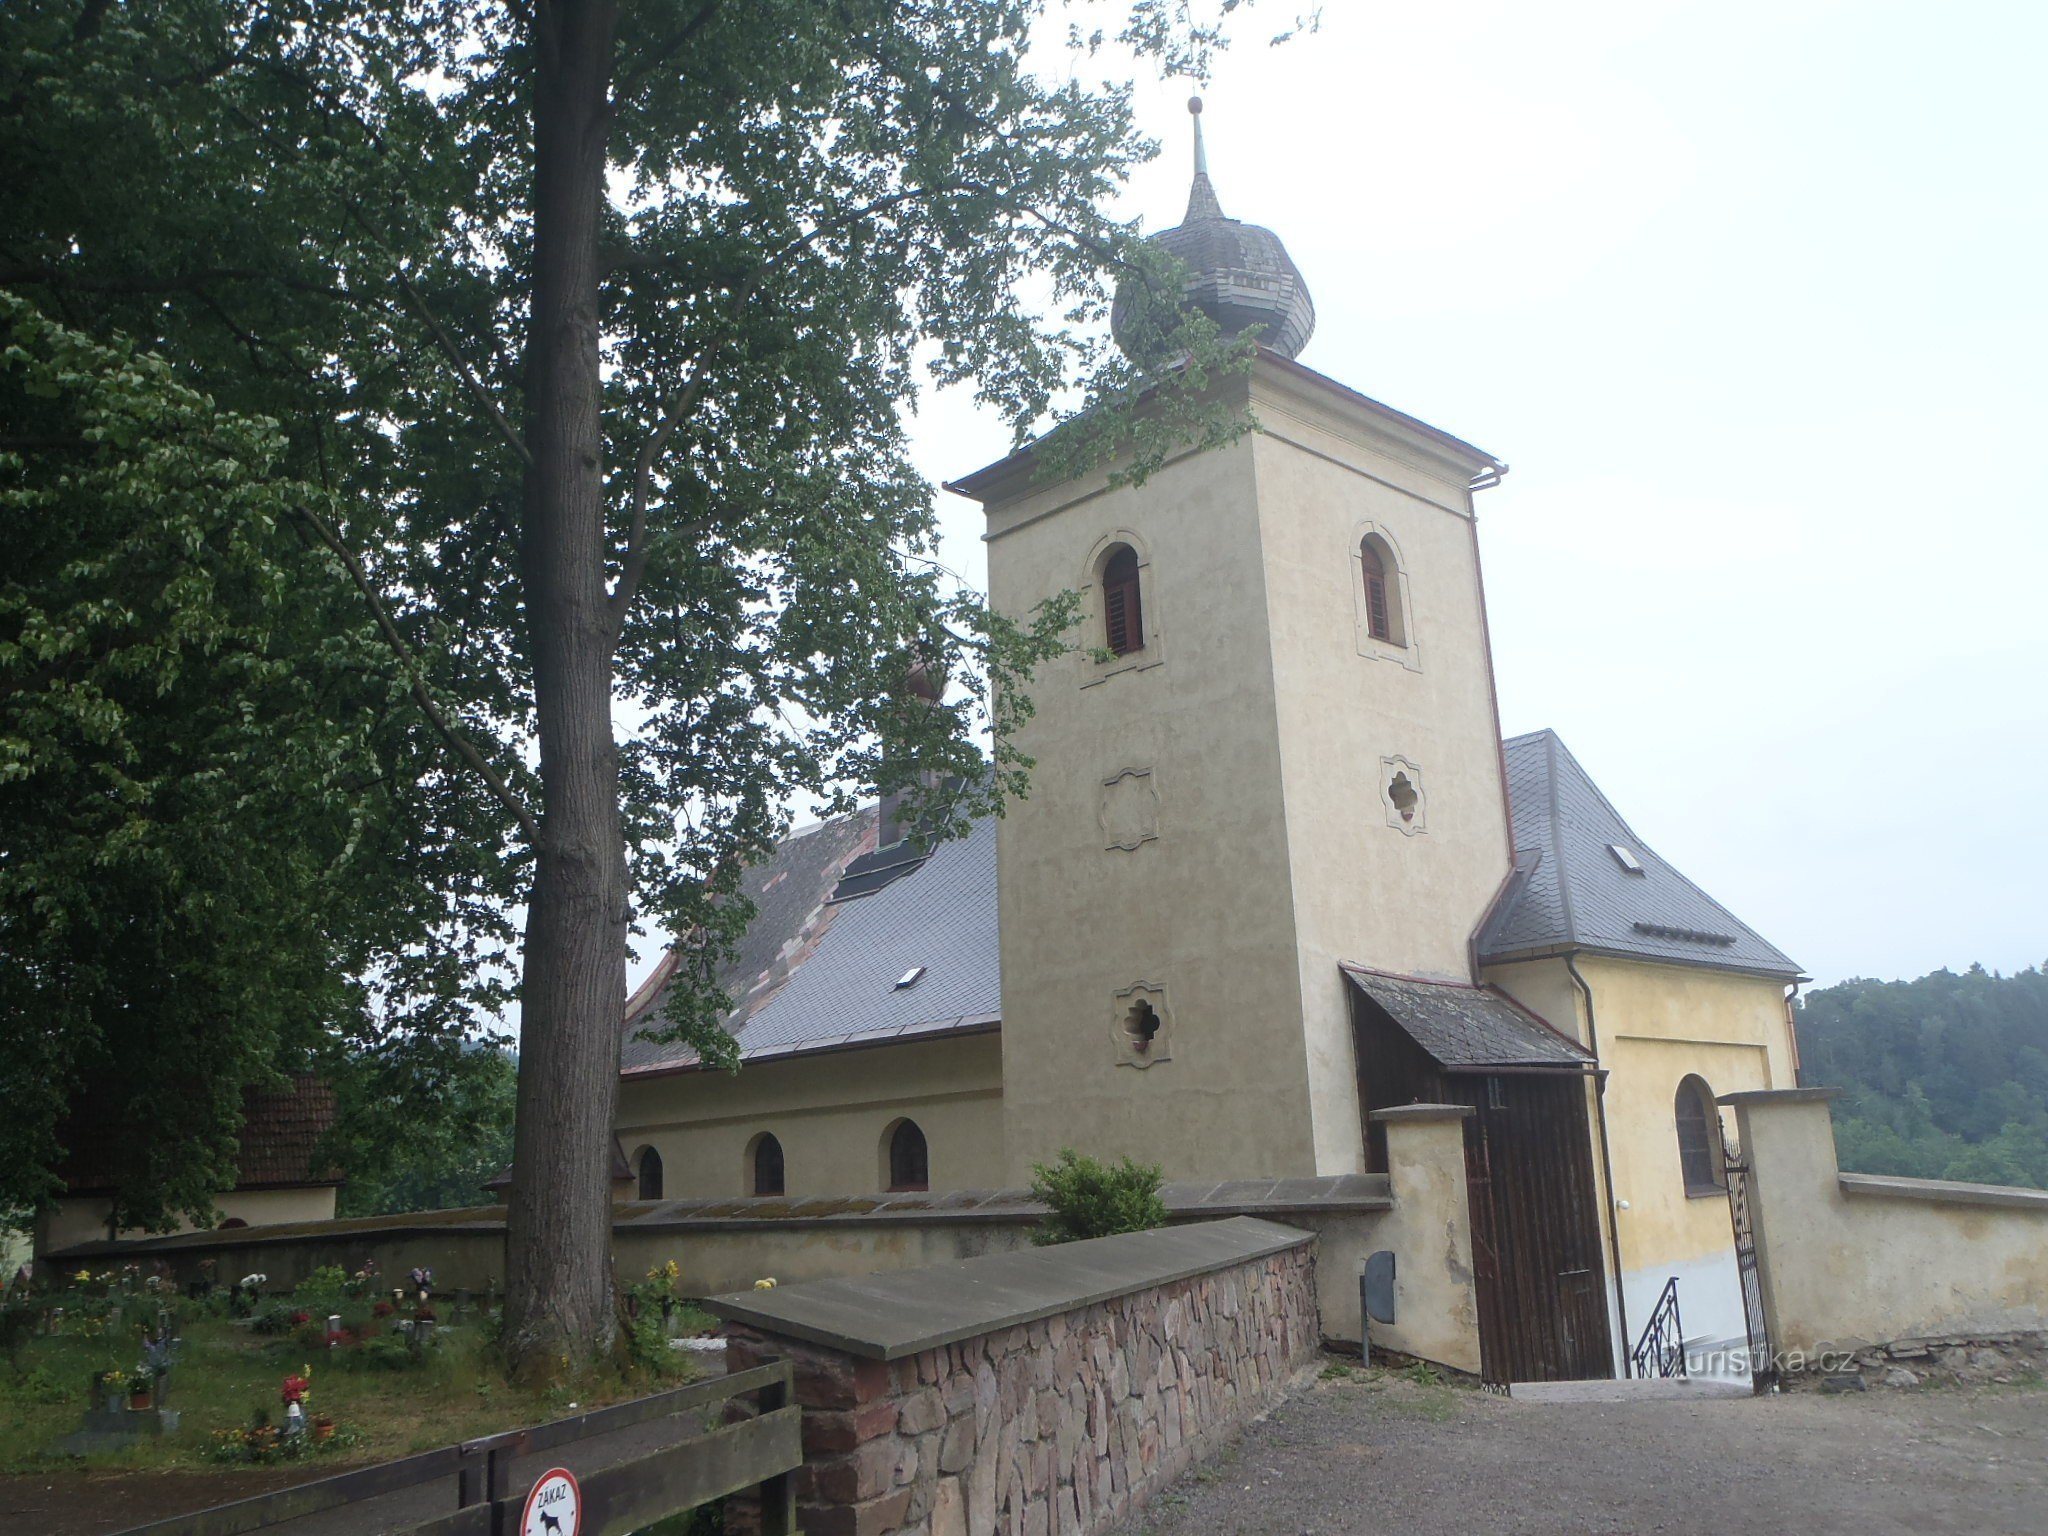 Nhà thờ St. Bartholomew